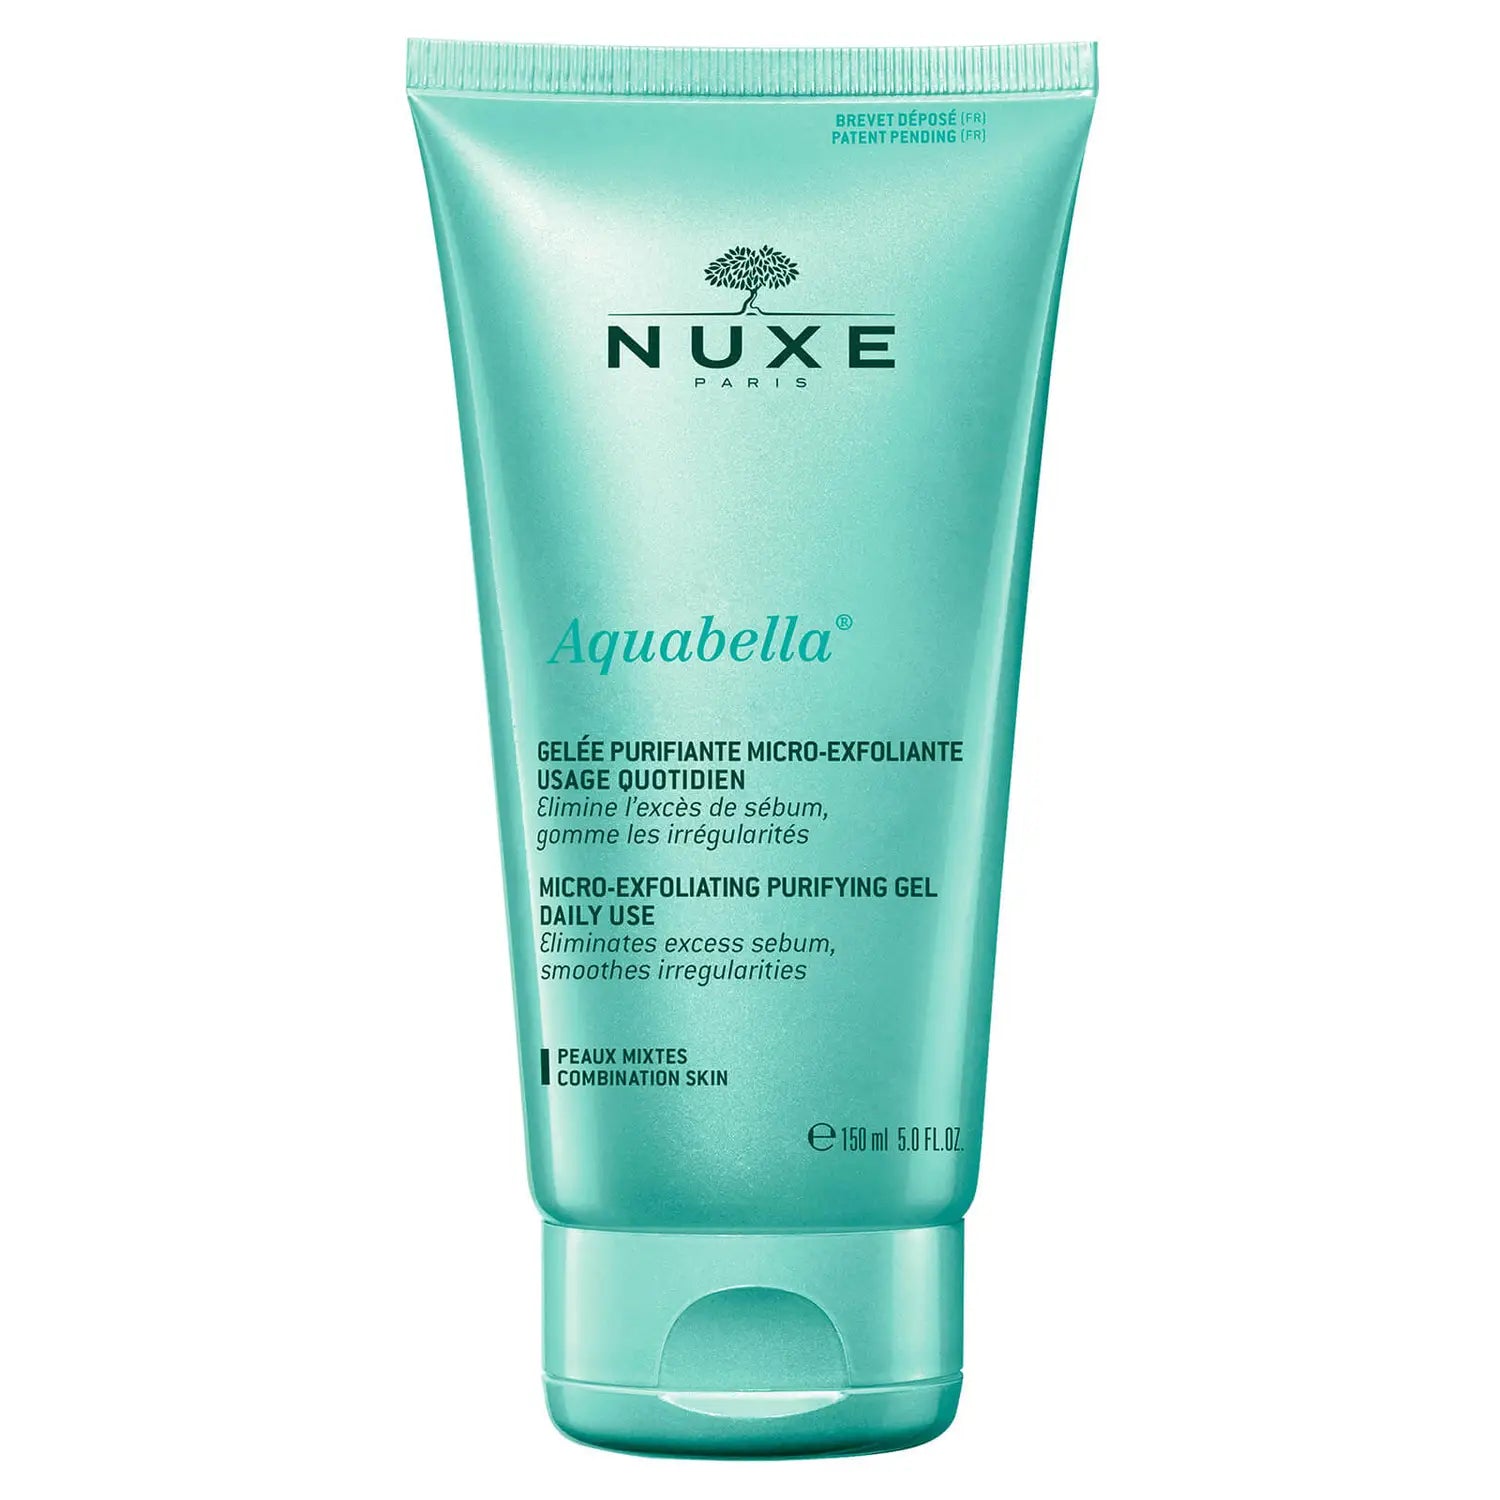 Nuxe Aquabella gel purify exfoliating 150ml 